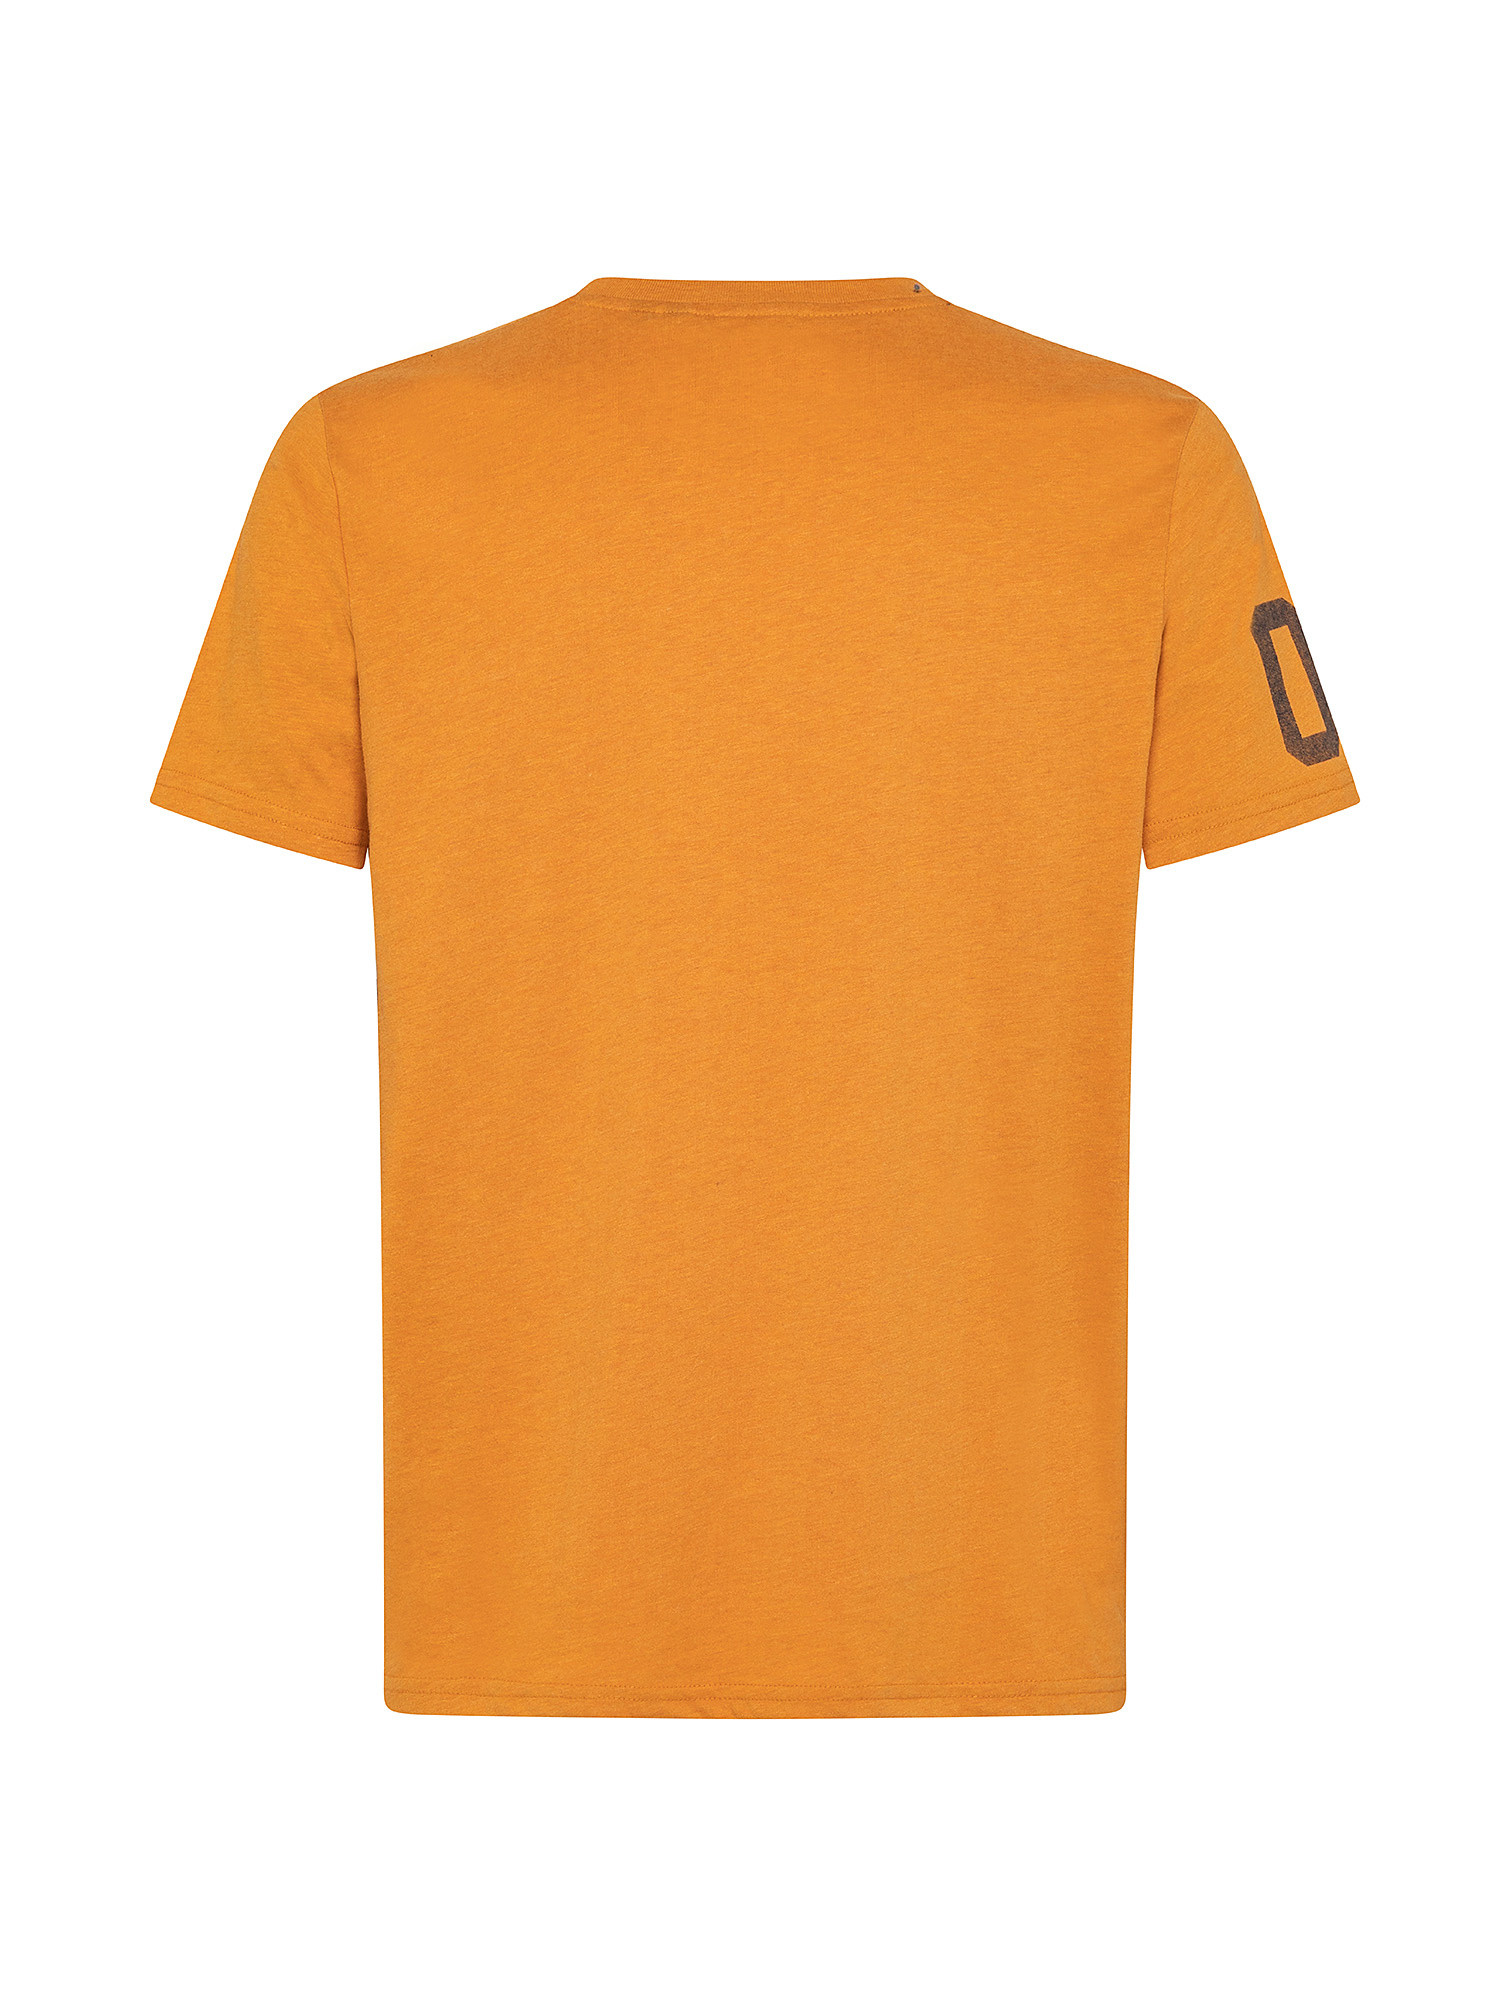 T-shirt classica con logo vintage, Arancione chiaro, large image number 1